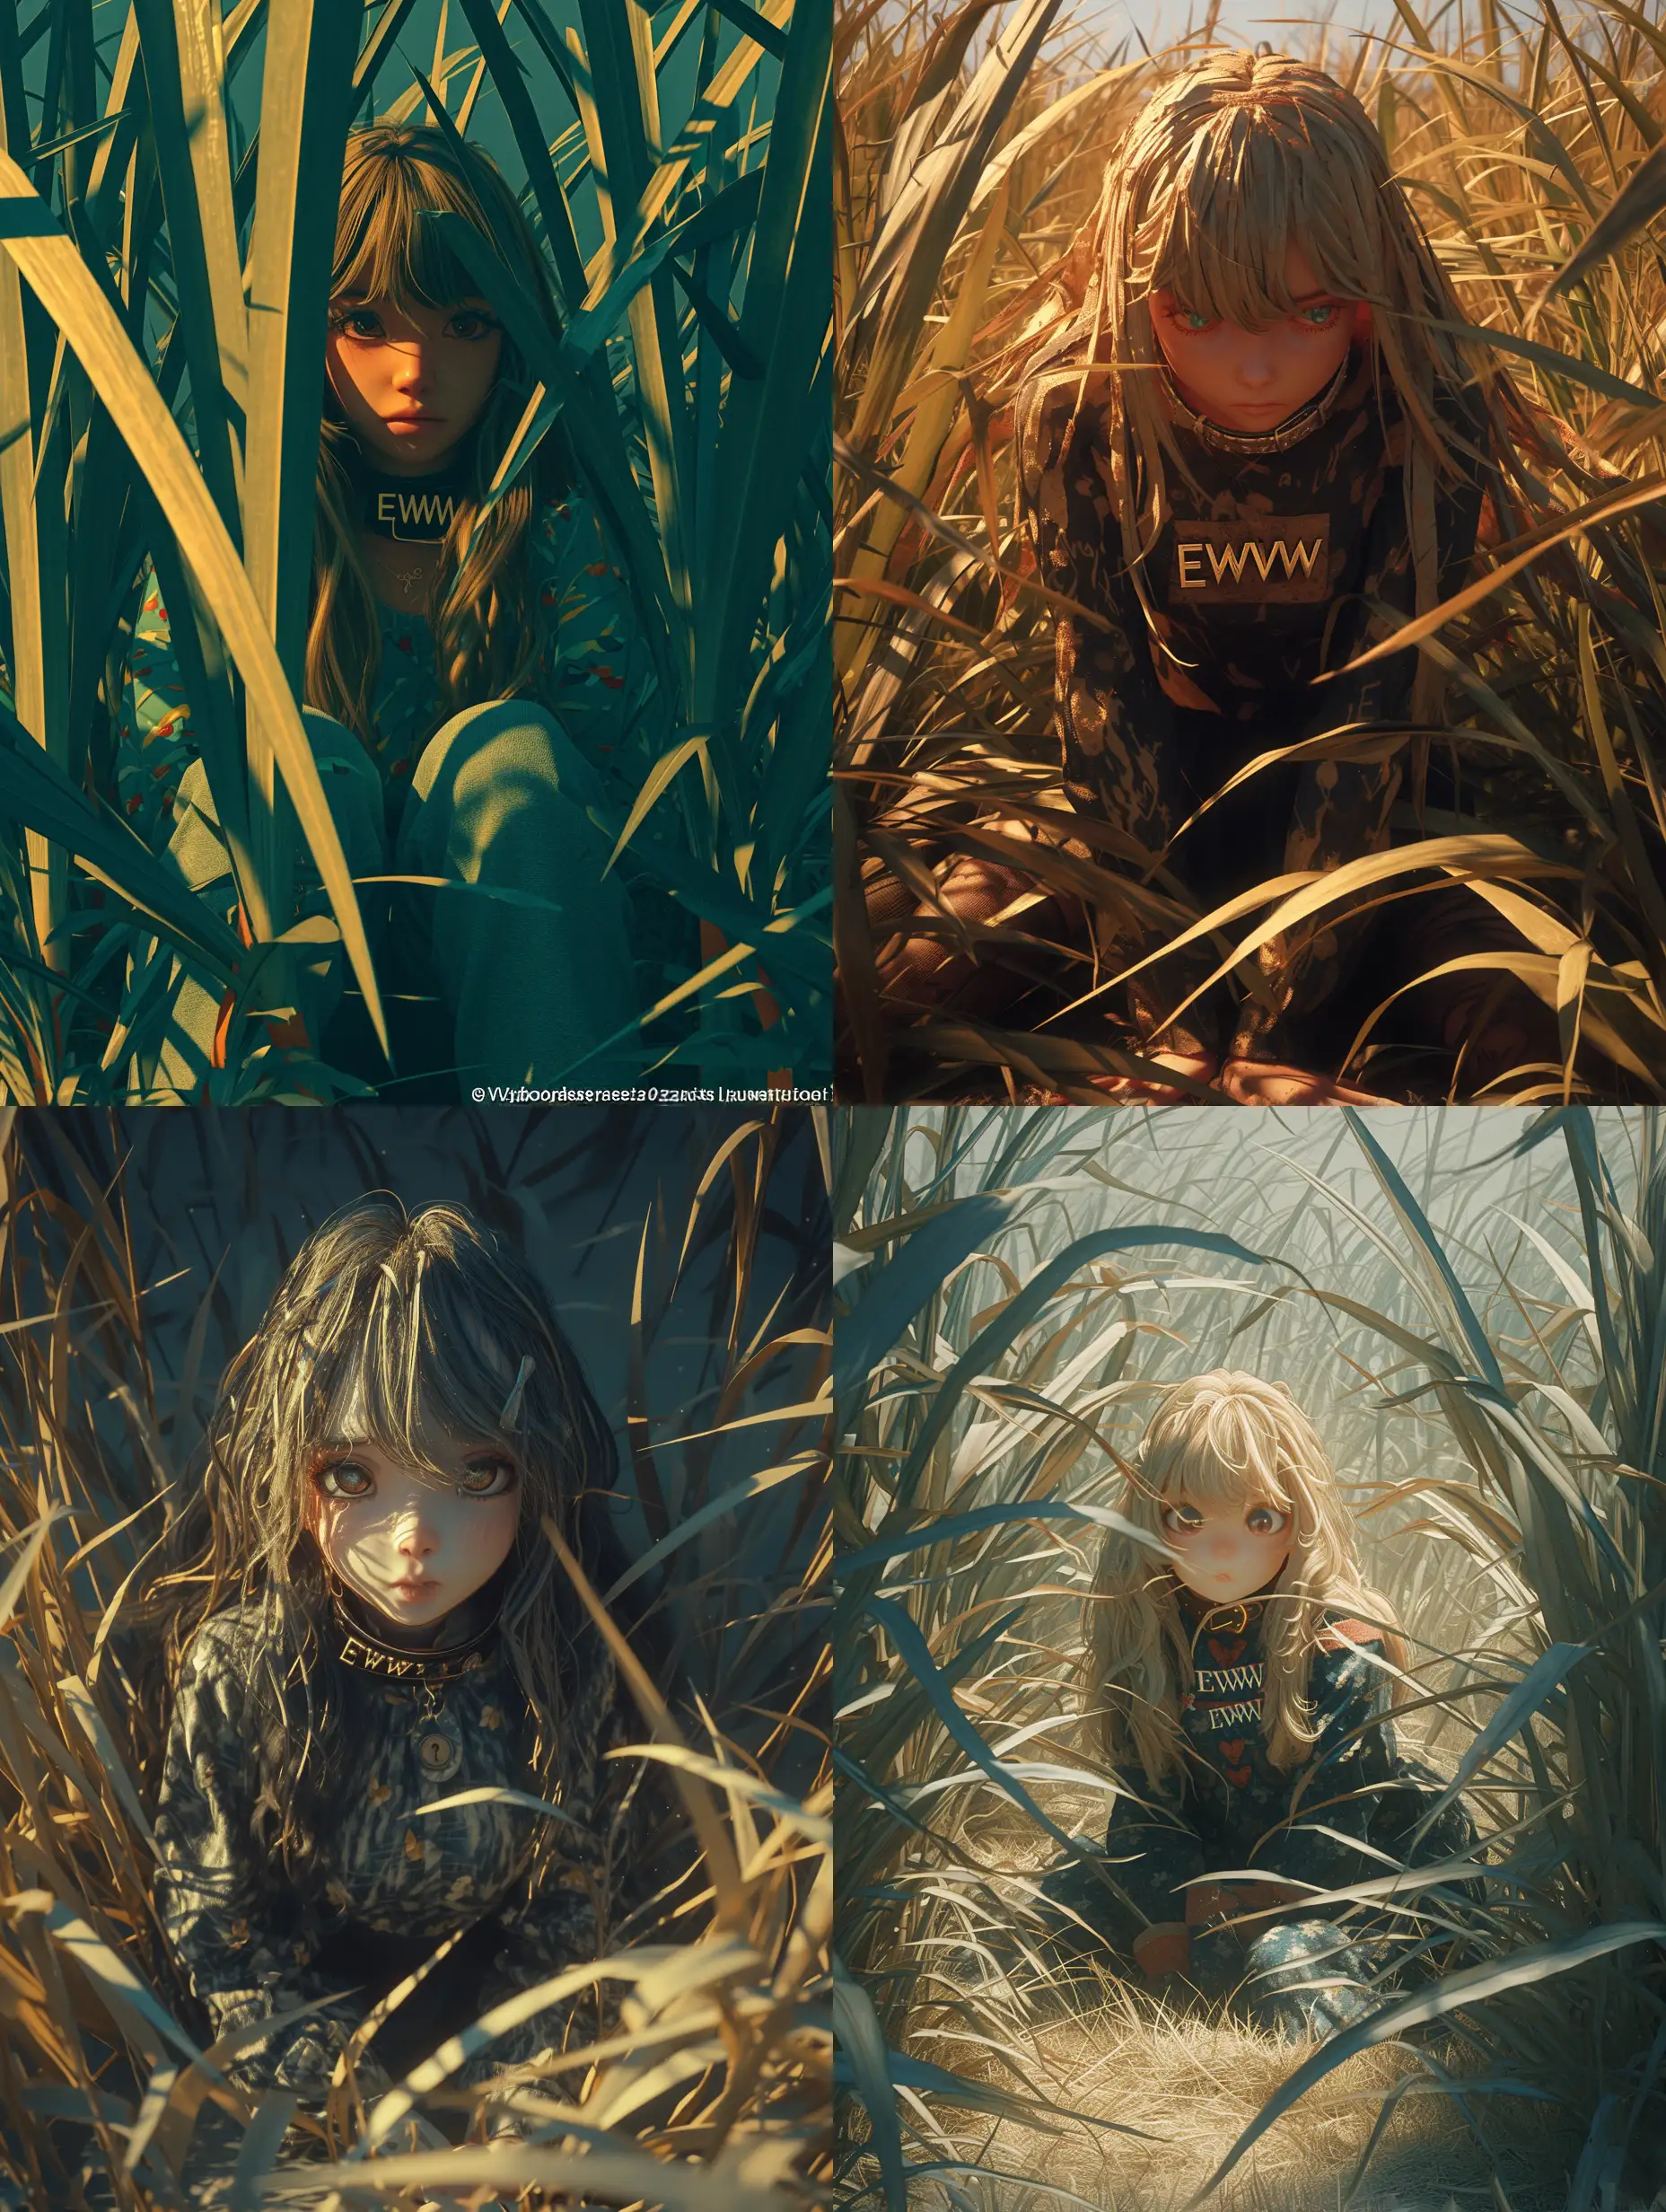 Surreal-Anime-Girl-with-EWW-Collar-Peeking-Through-Tall-Grass